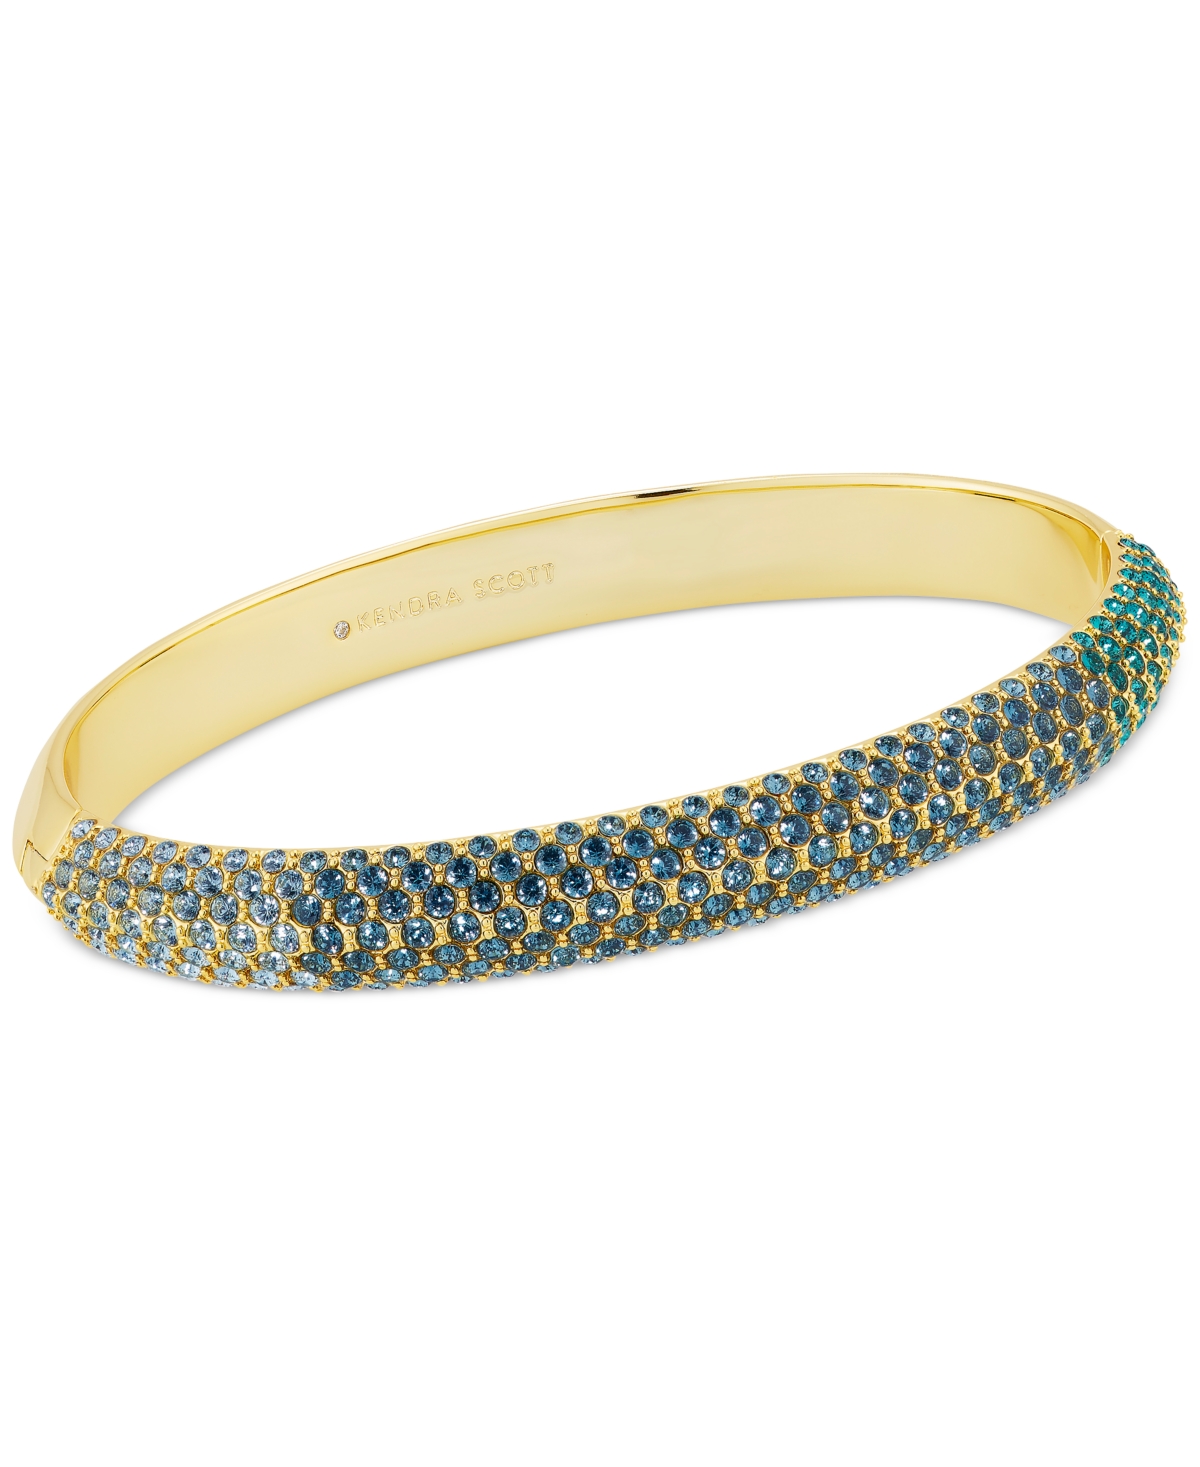 Kendra Scott Mikki Ombre Pave Bangle Bracelet In 14k Gold Plated In Gld Grn Bl